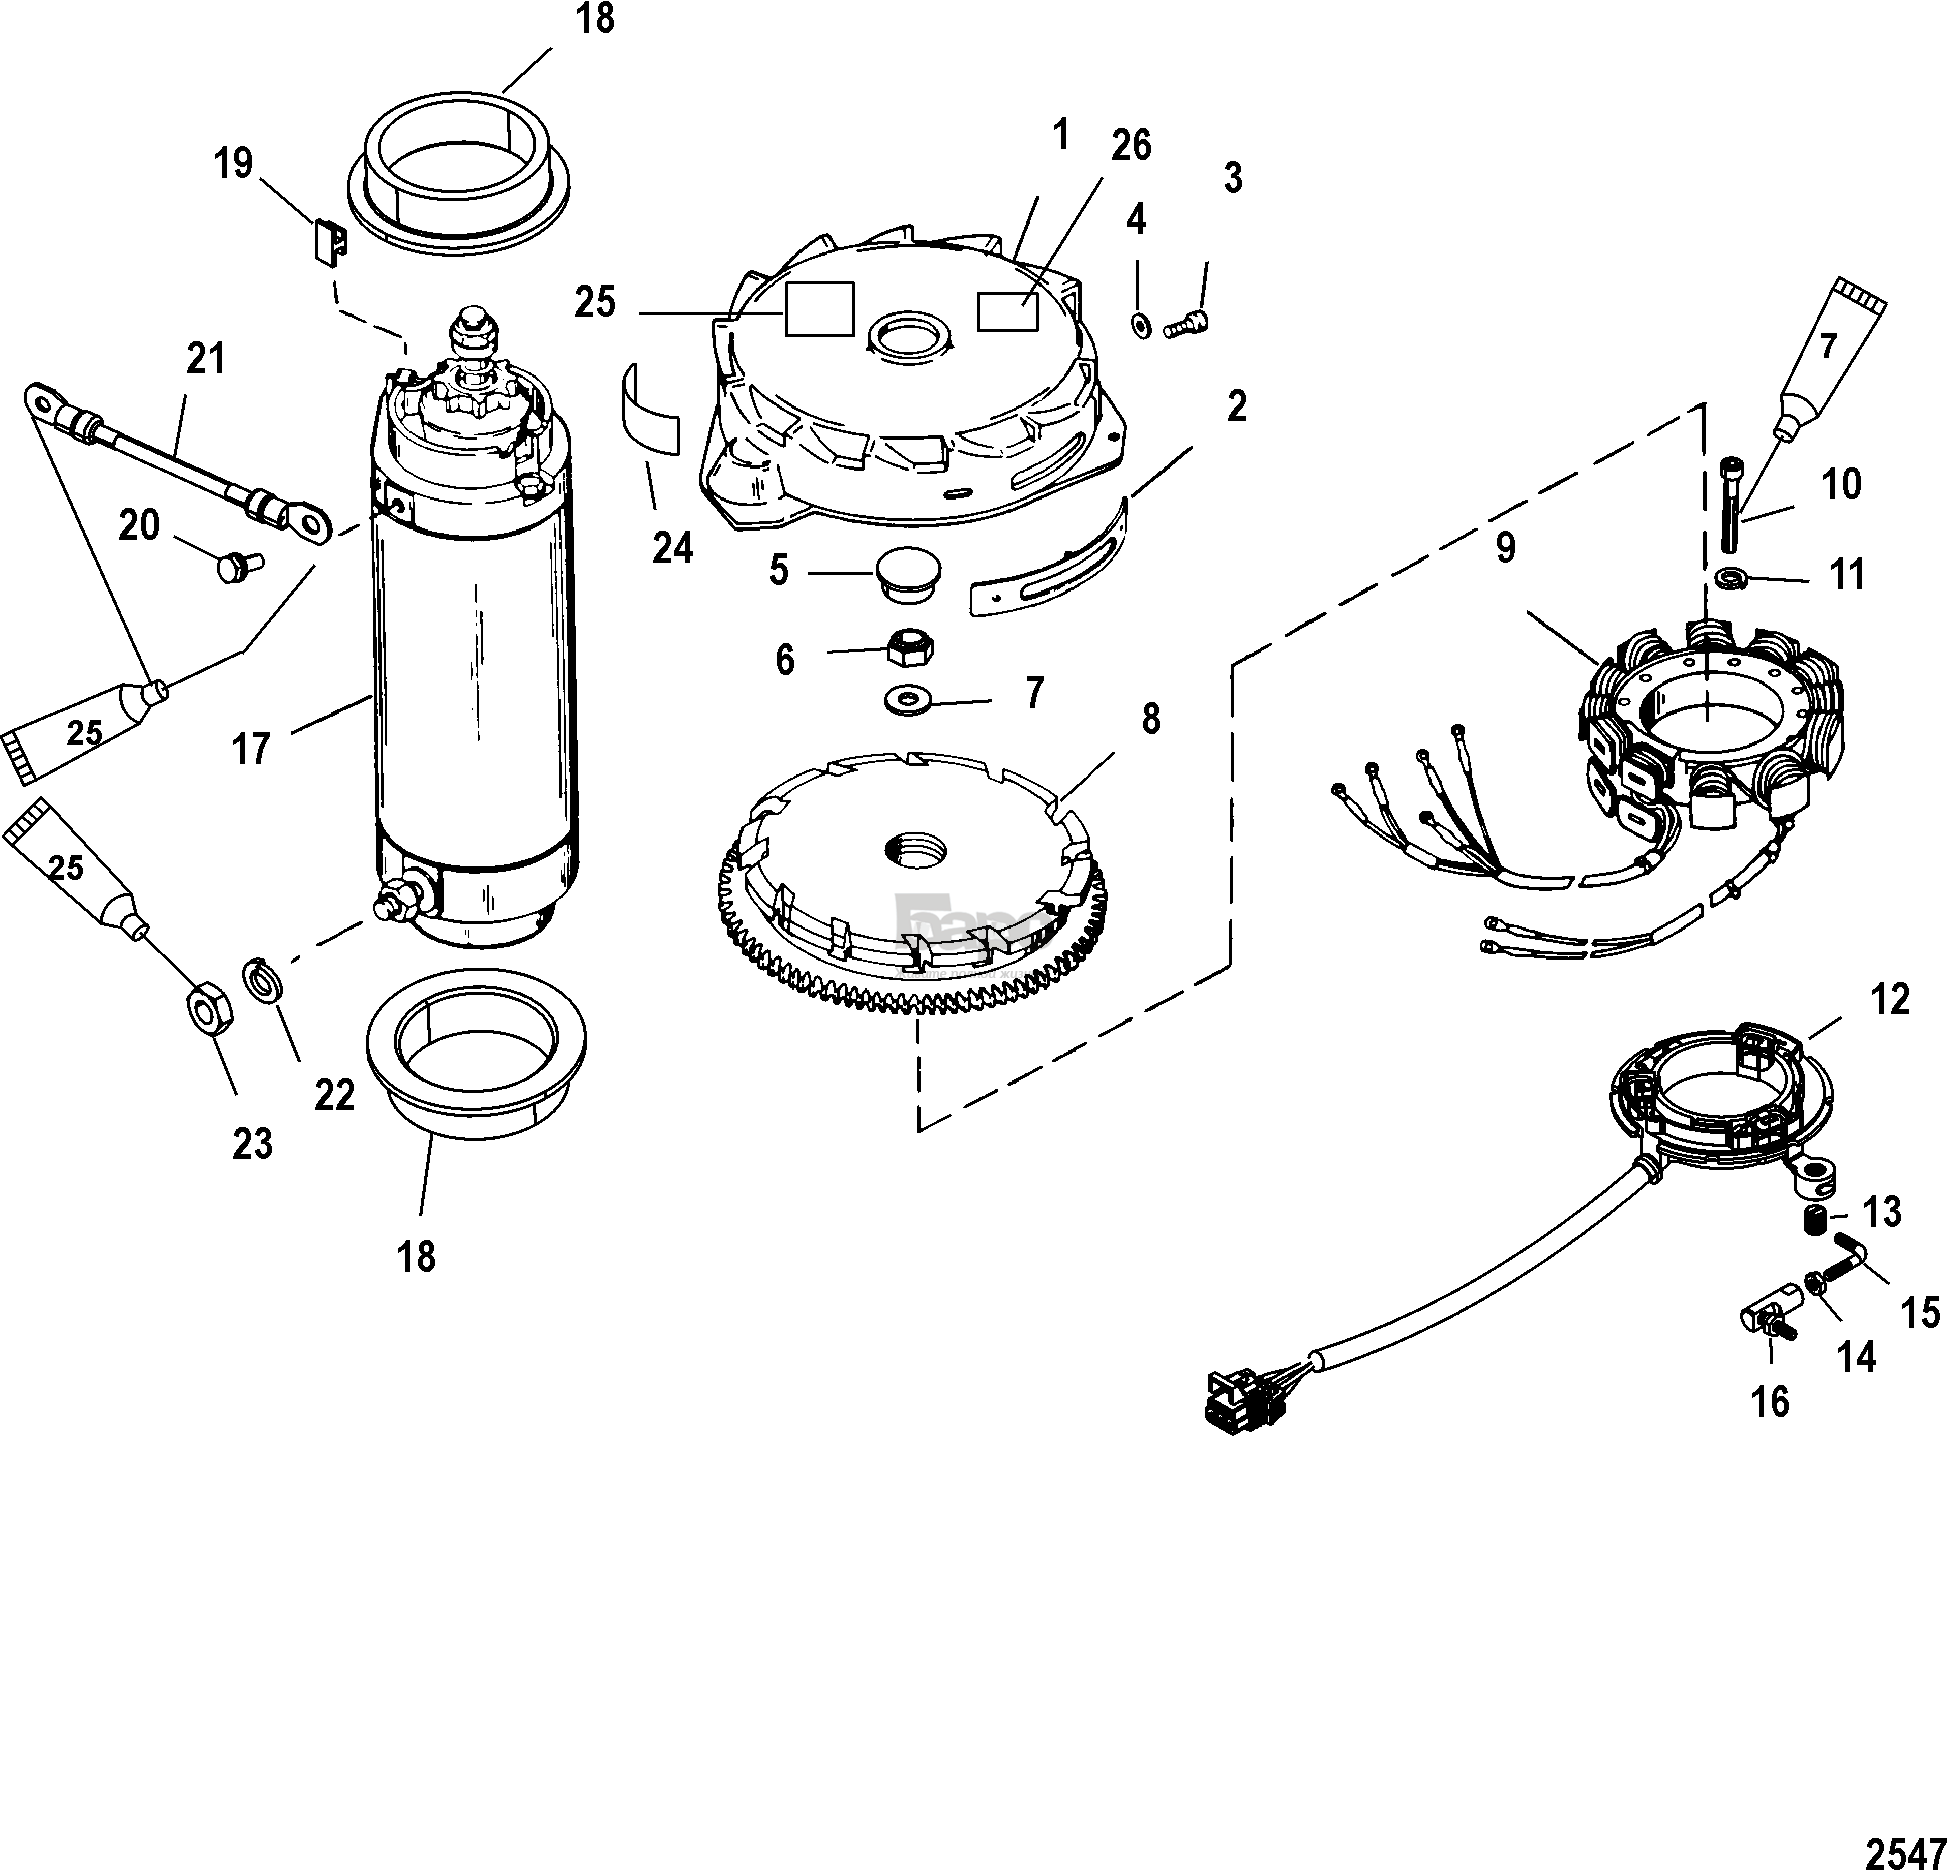 Flywheel/Starter Motor